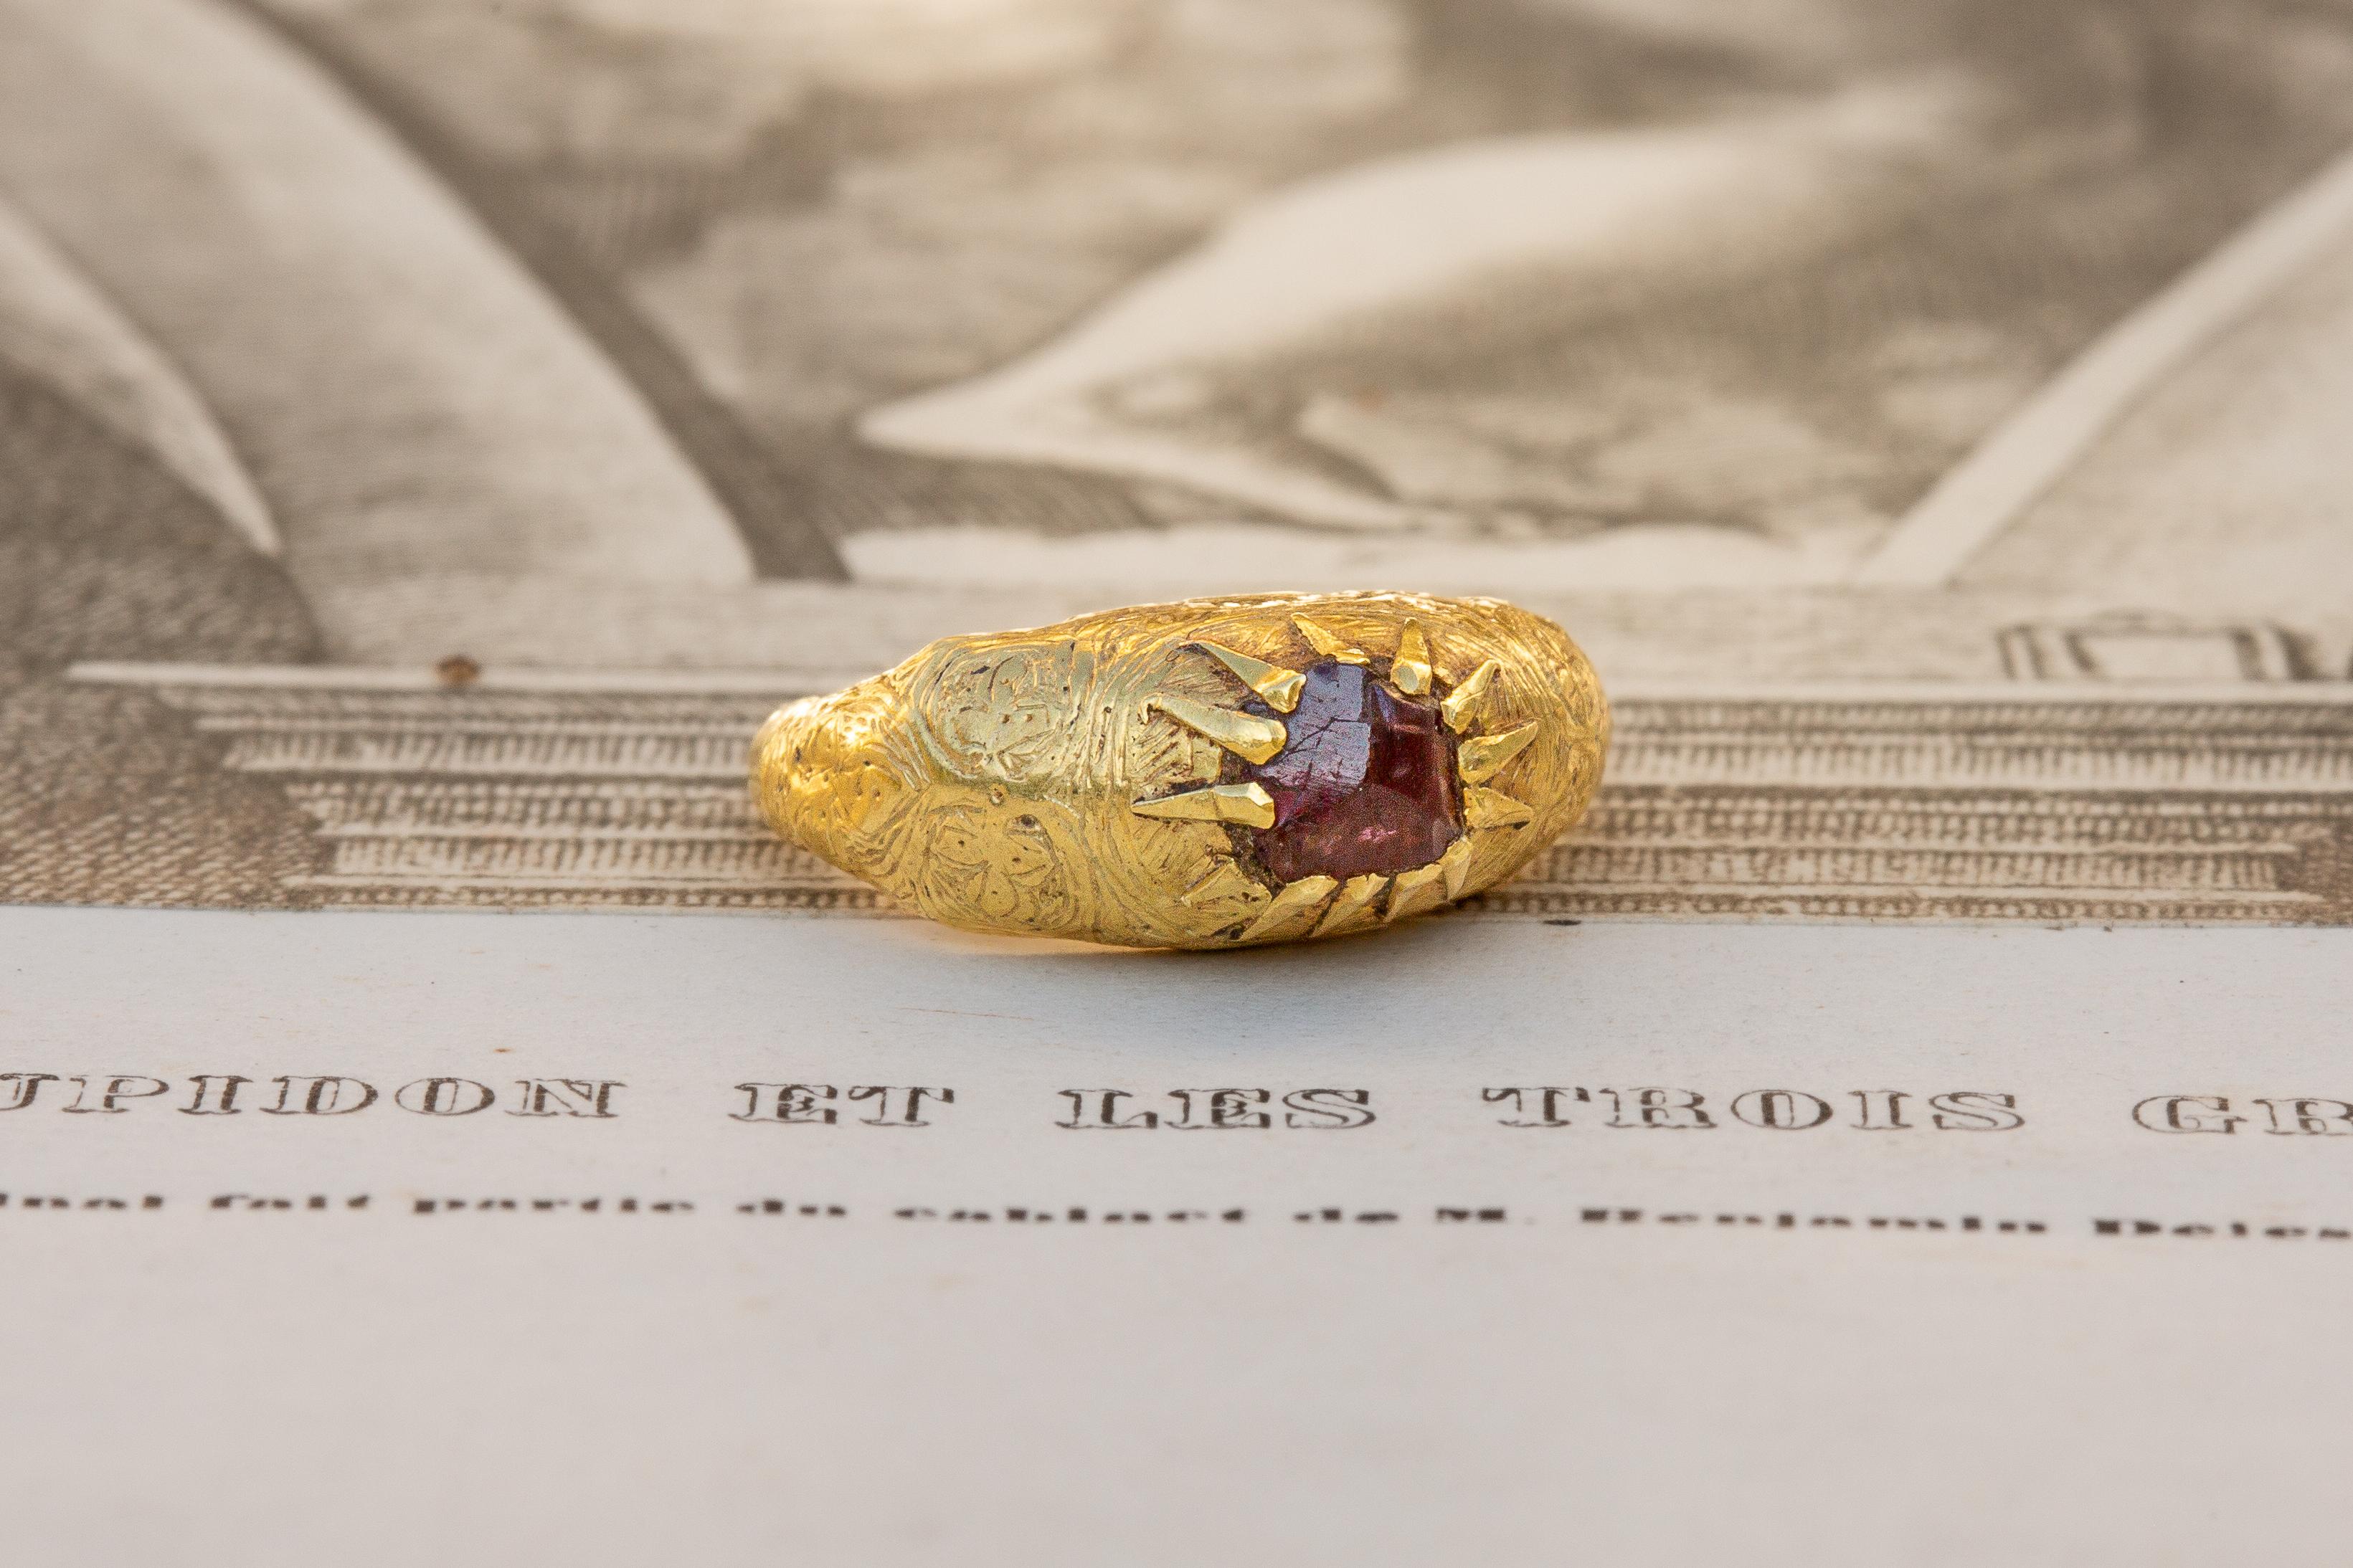 Rough Cut Antique Islamic Seljuk ‘Selçuklu’ Period Gold Ring with Garnet 12th Century AD